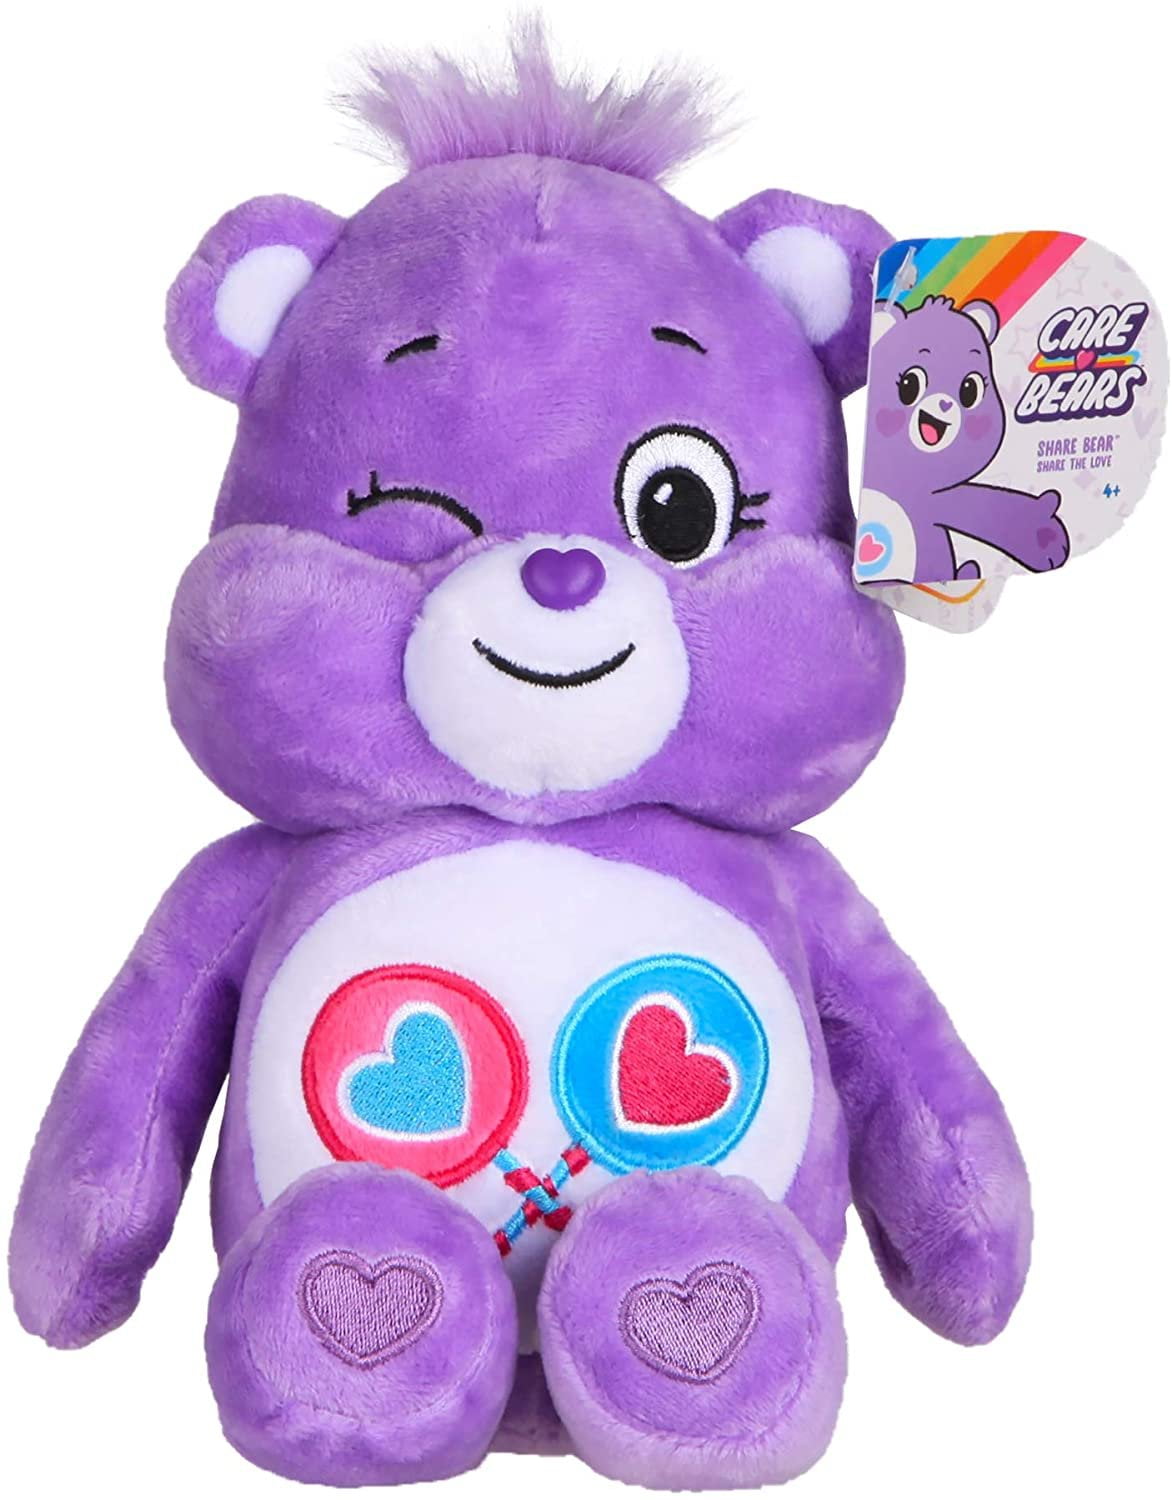 NEW 2020 Care Bears 9" Bean Plush Cheer Bear Soft Huggable Material 